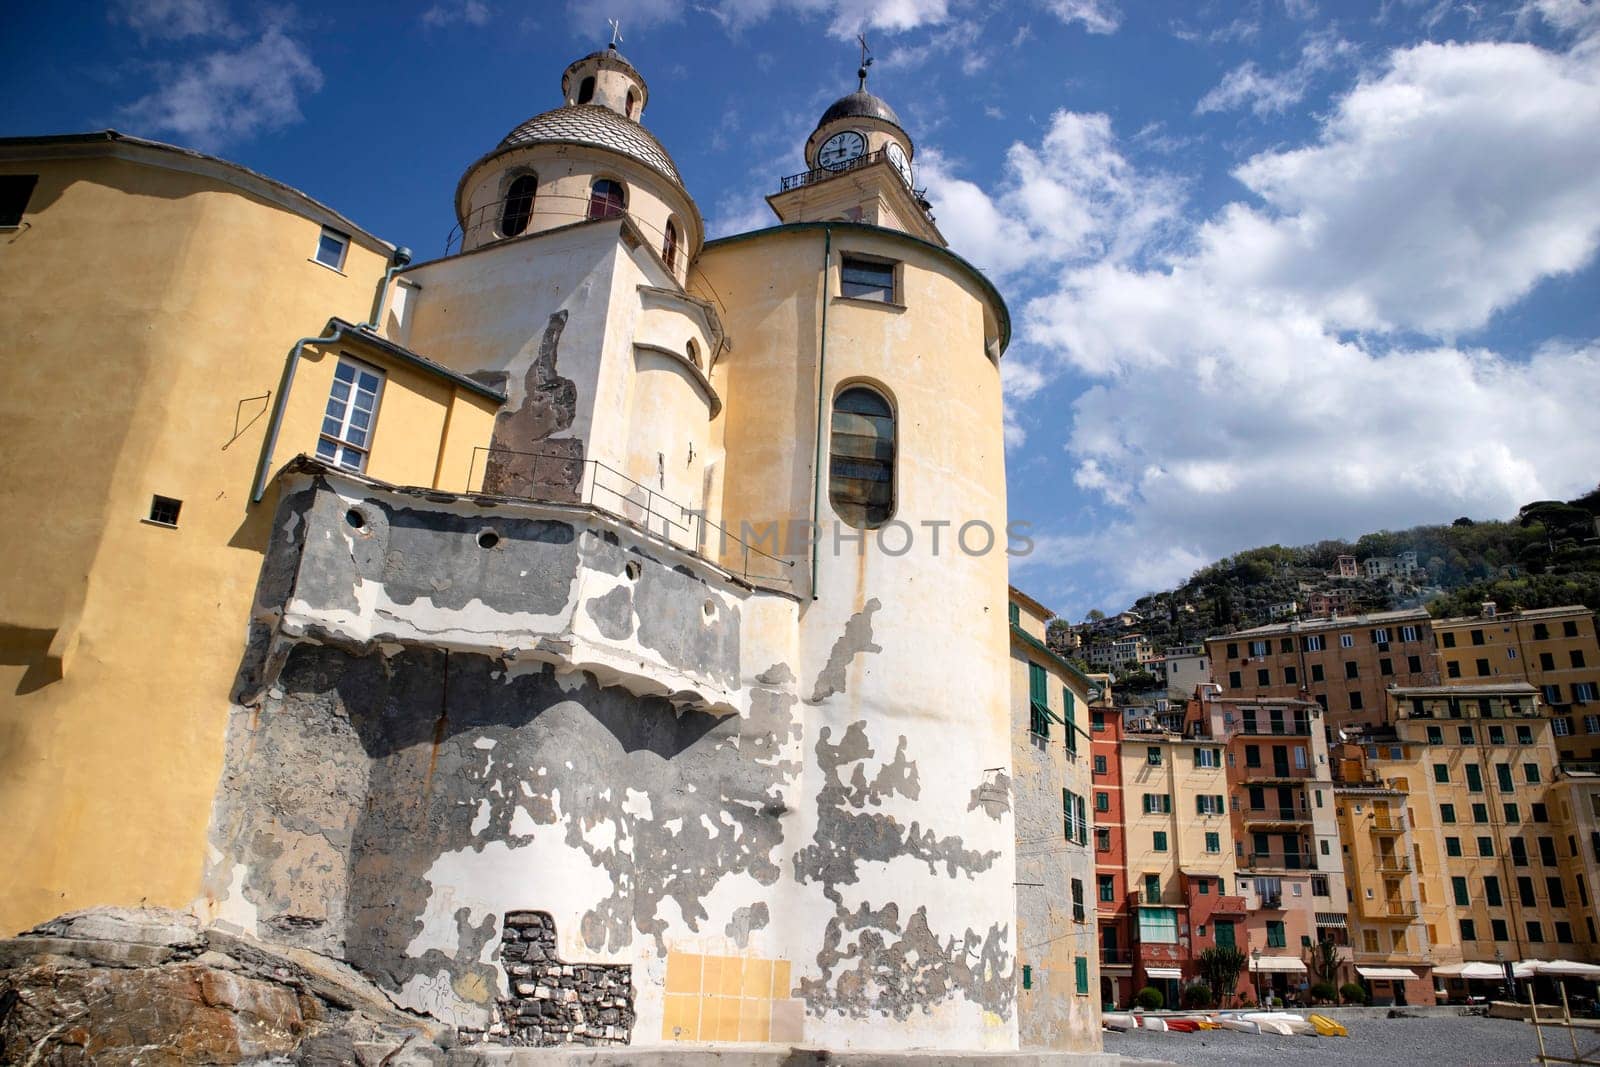 The catholic church of Camogli Genoa Italy  by fotografiche.eu